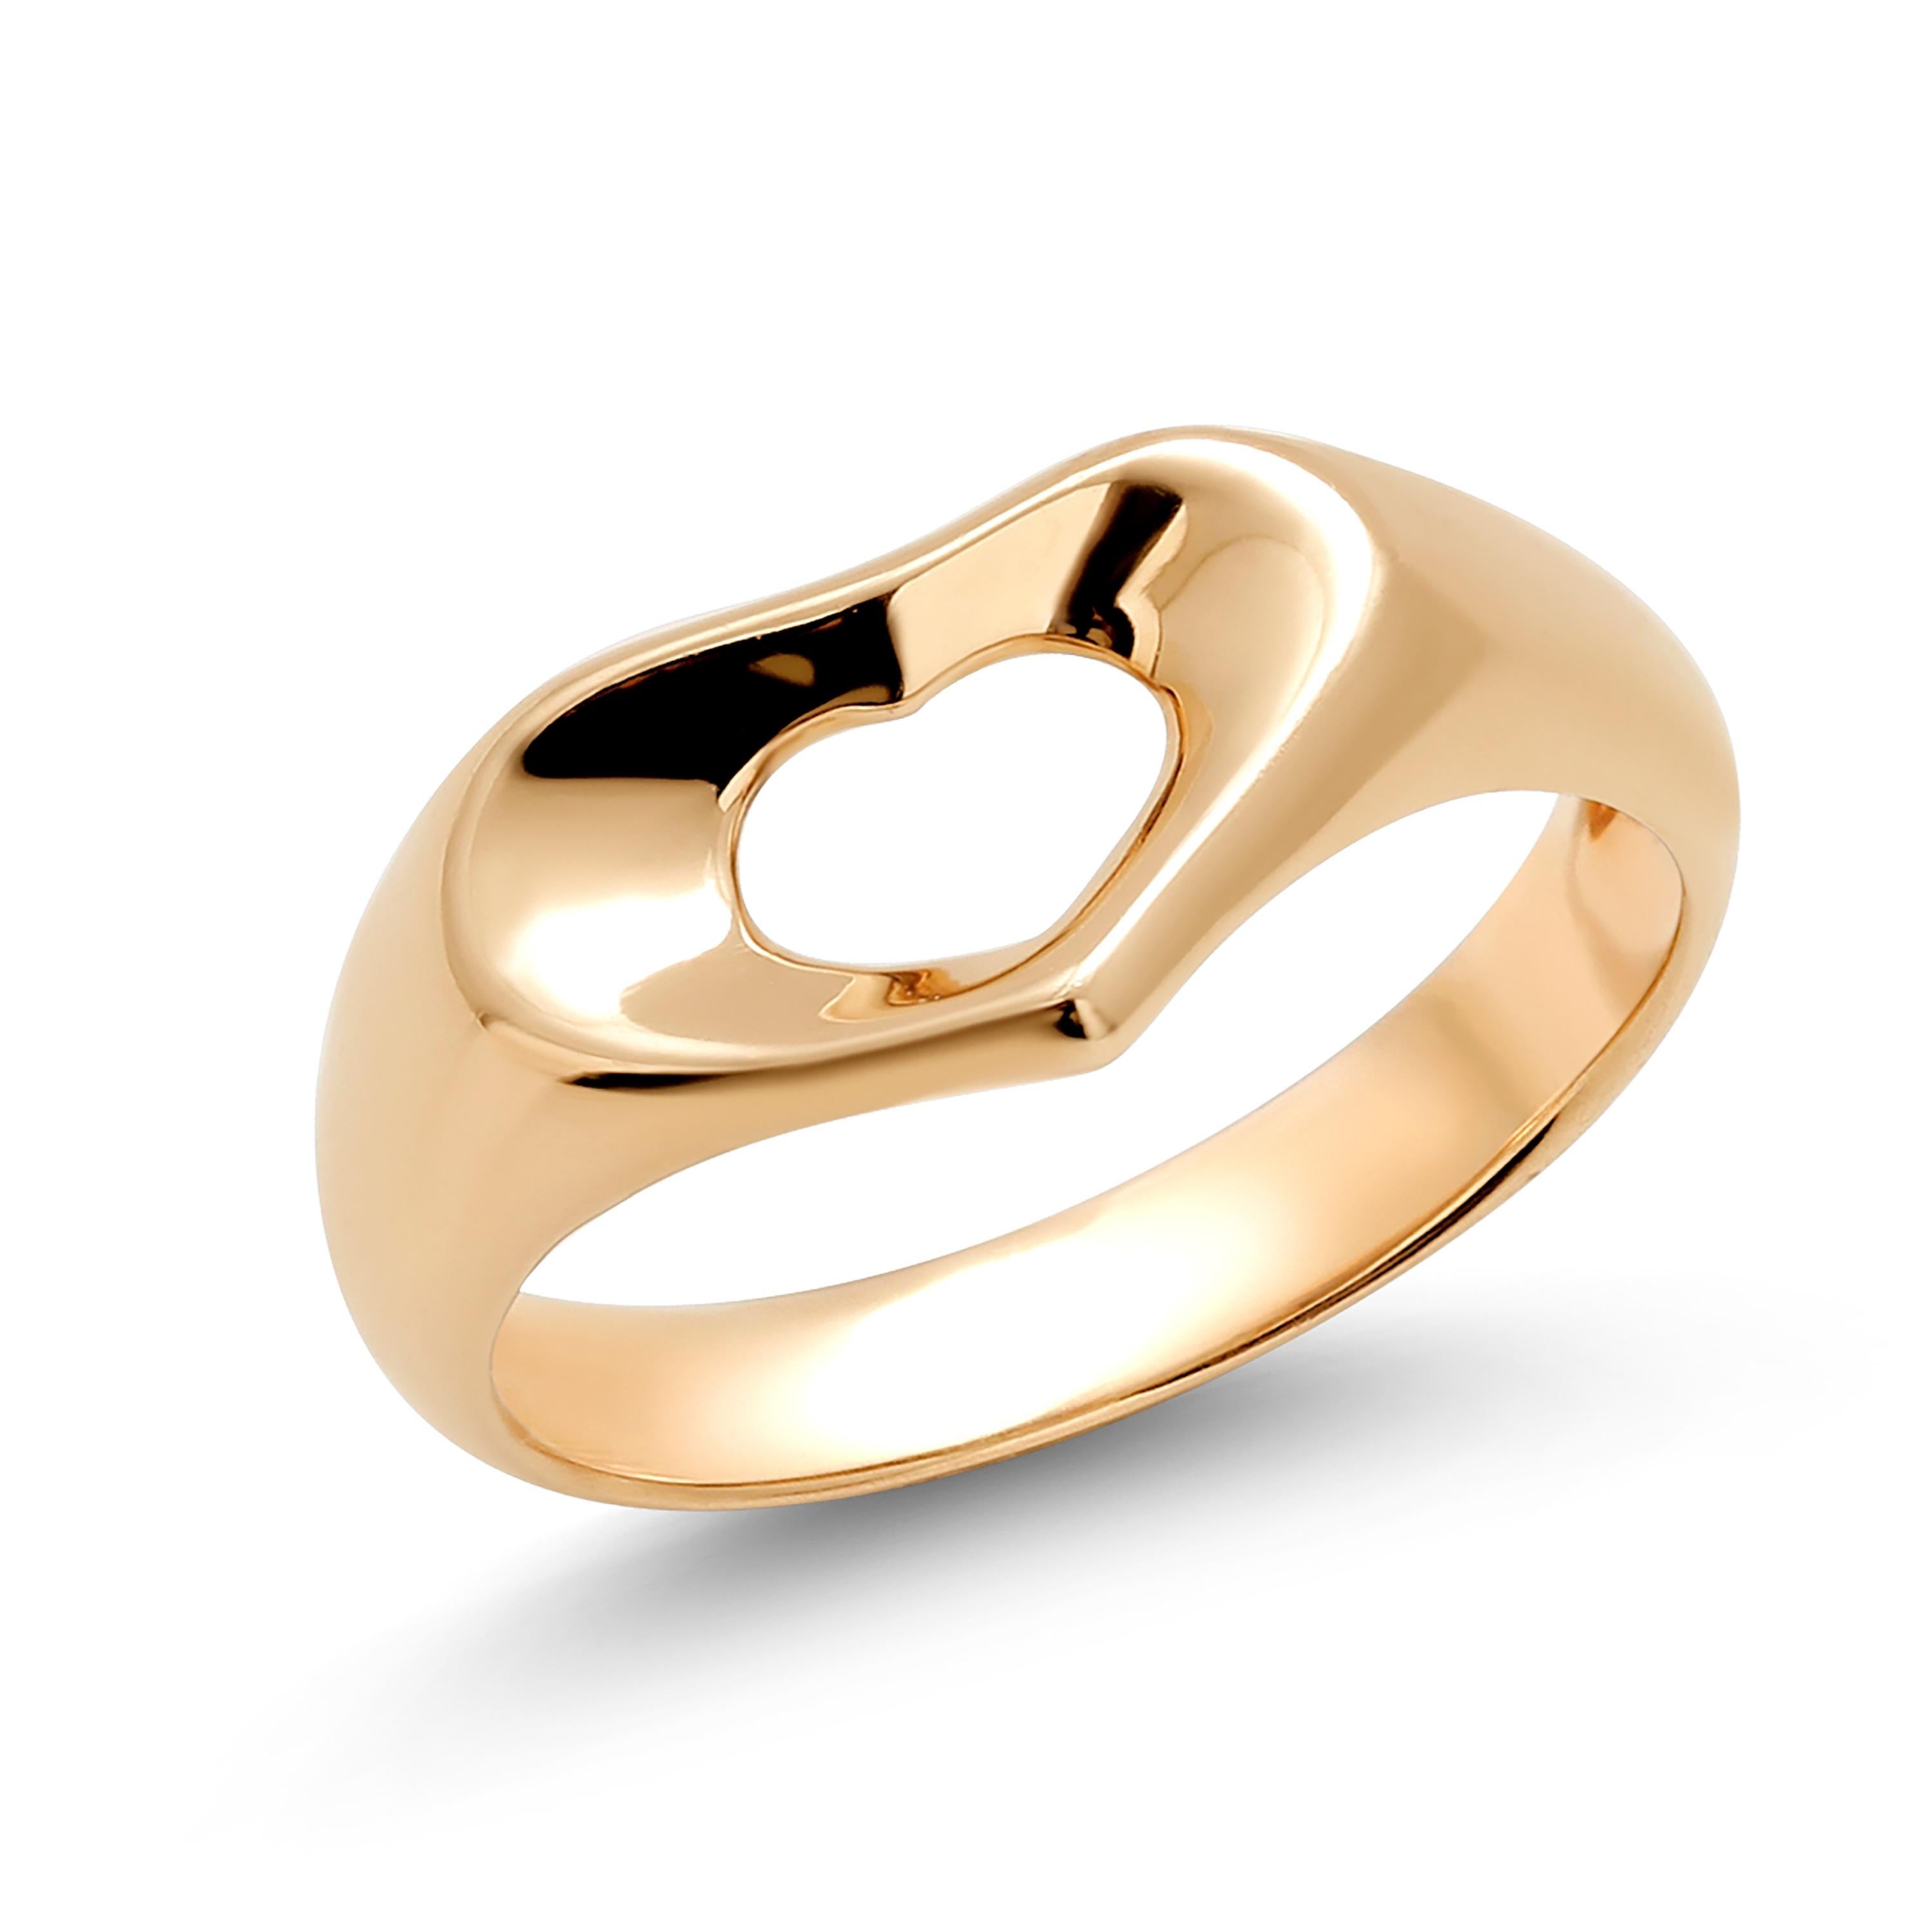 Contemporary Elsa Peretti for Tiffany & Co. Open Heart Eighteen Karat Yellow Gold Ring Size 6